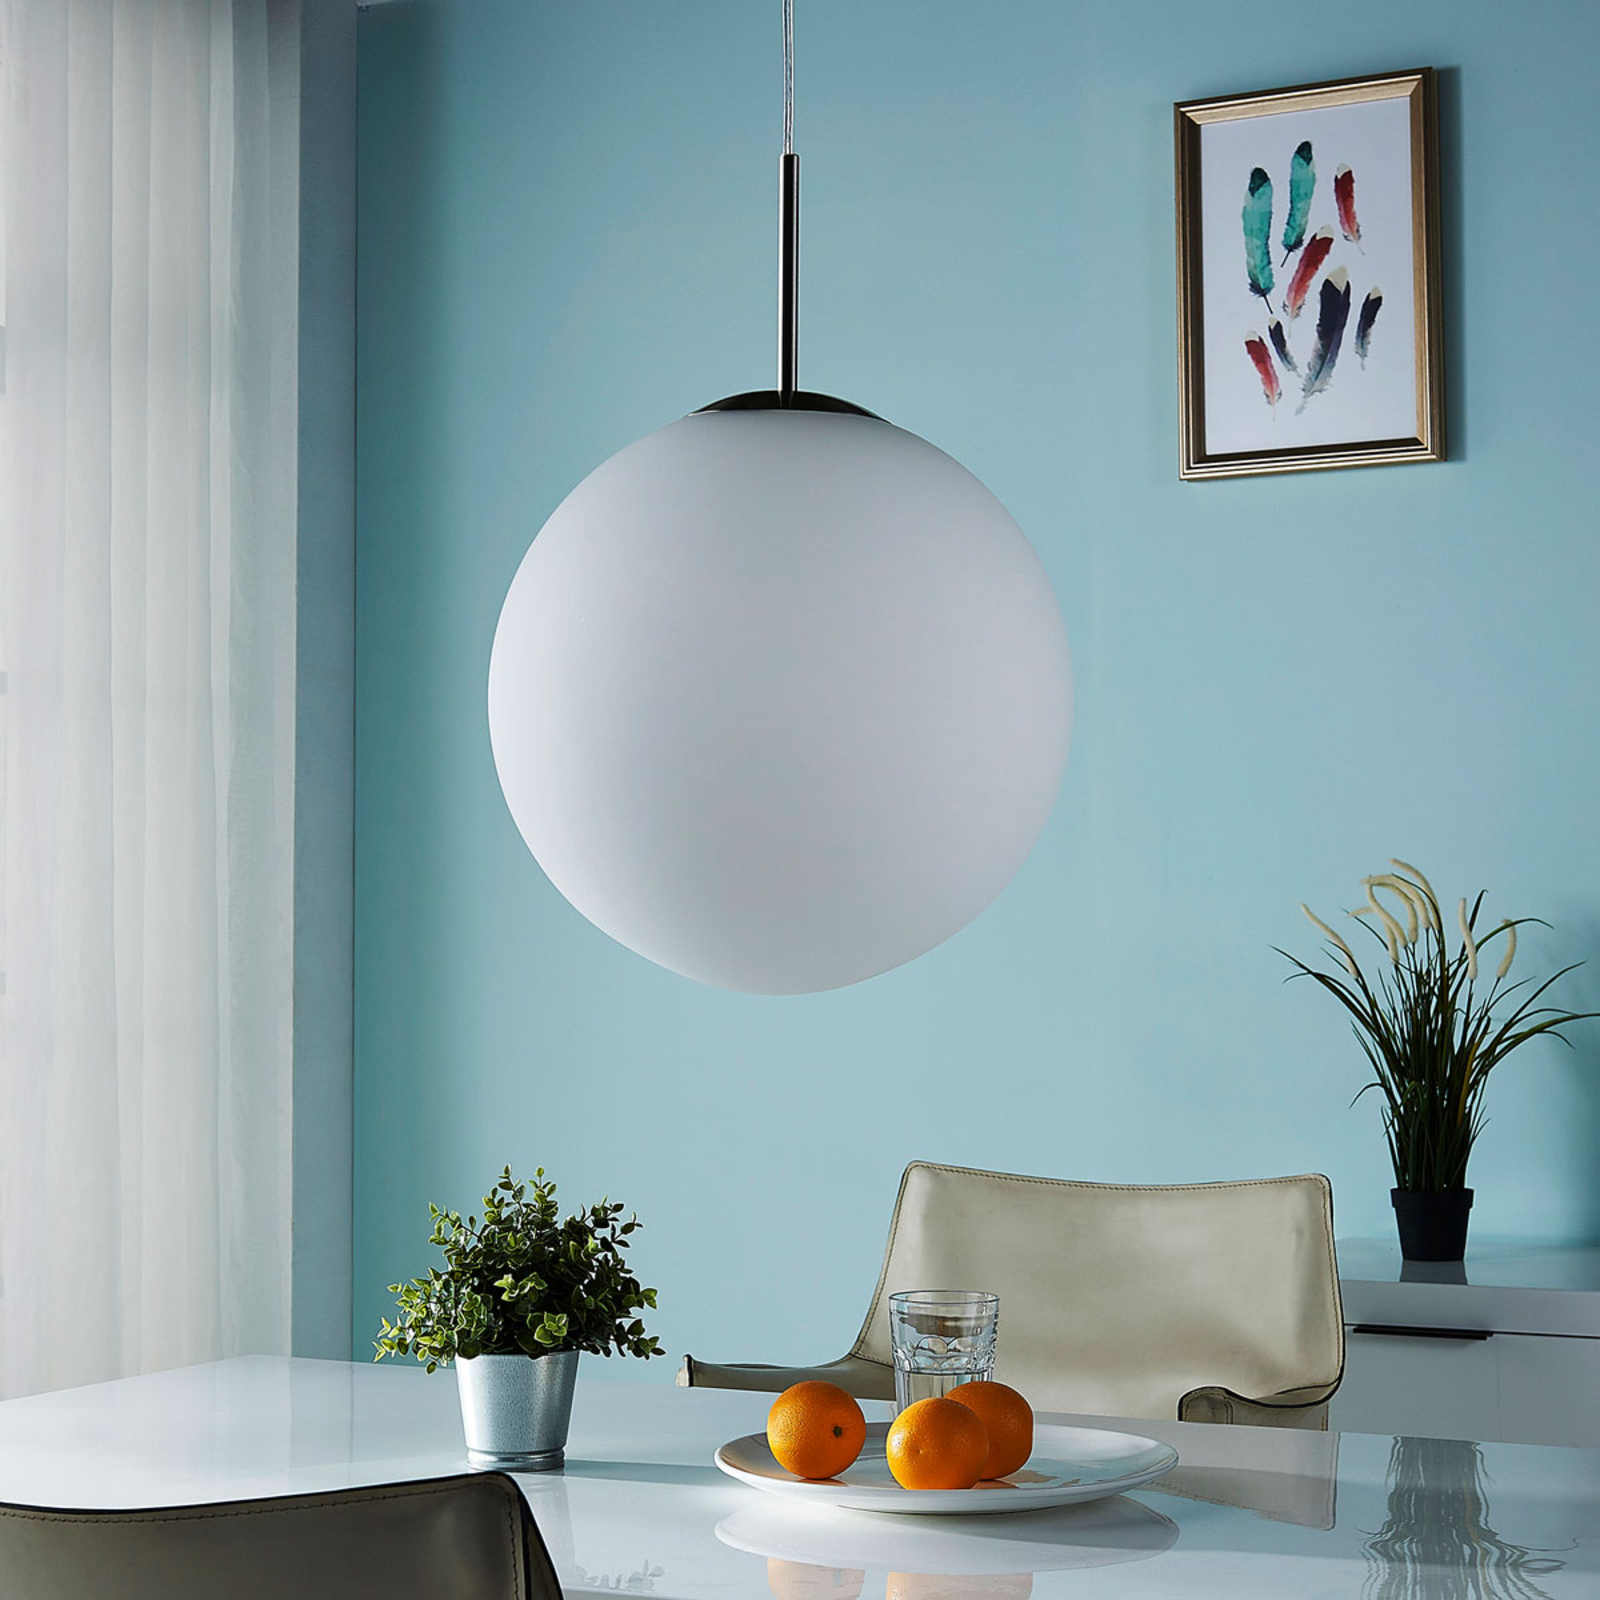 Bolvormige hanglamp Marike wit | Lampen24.be